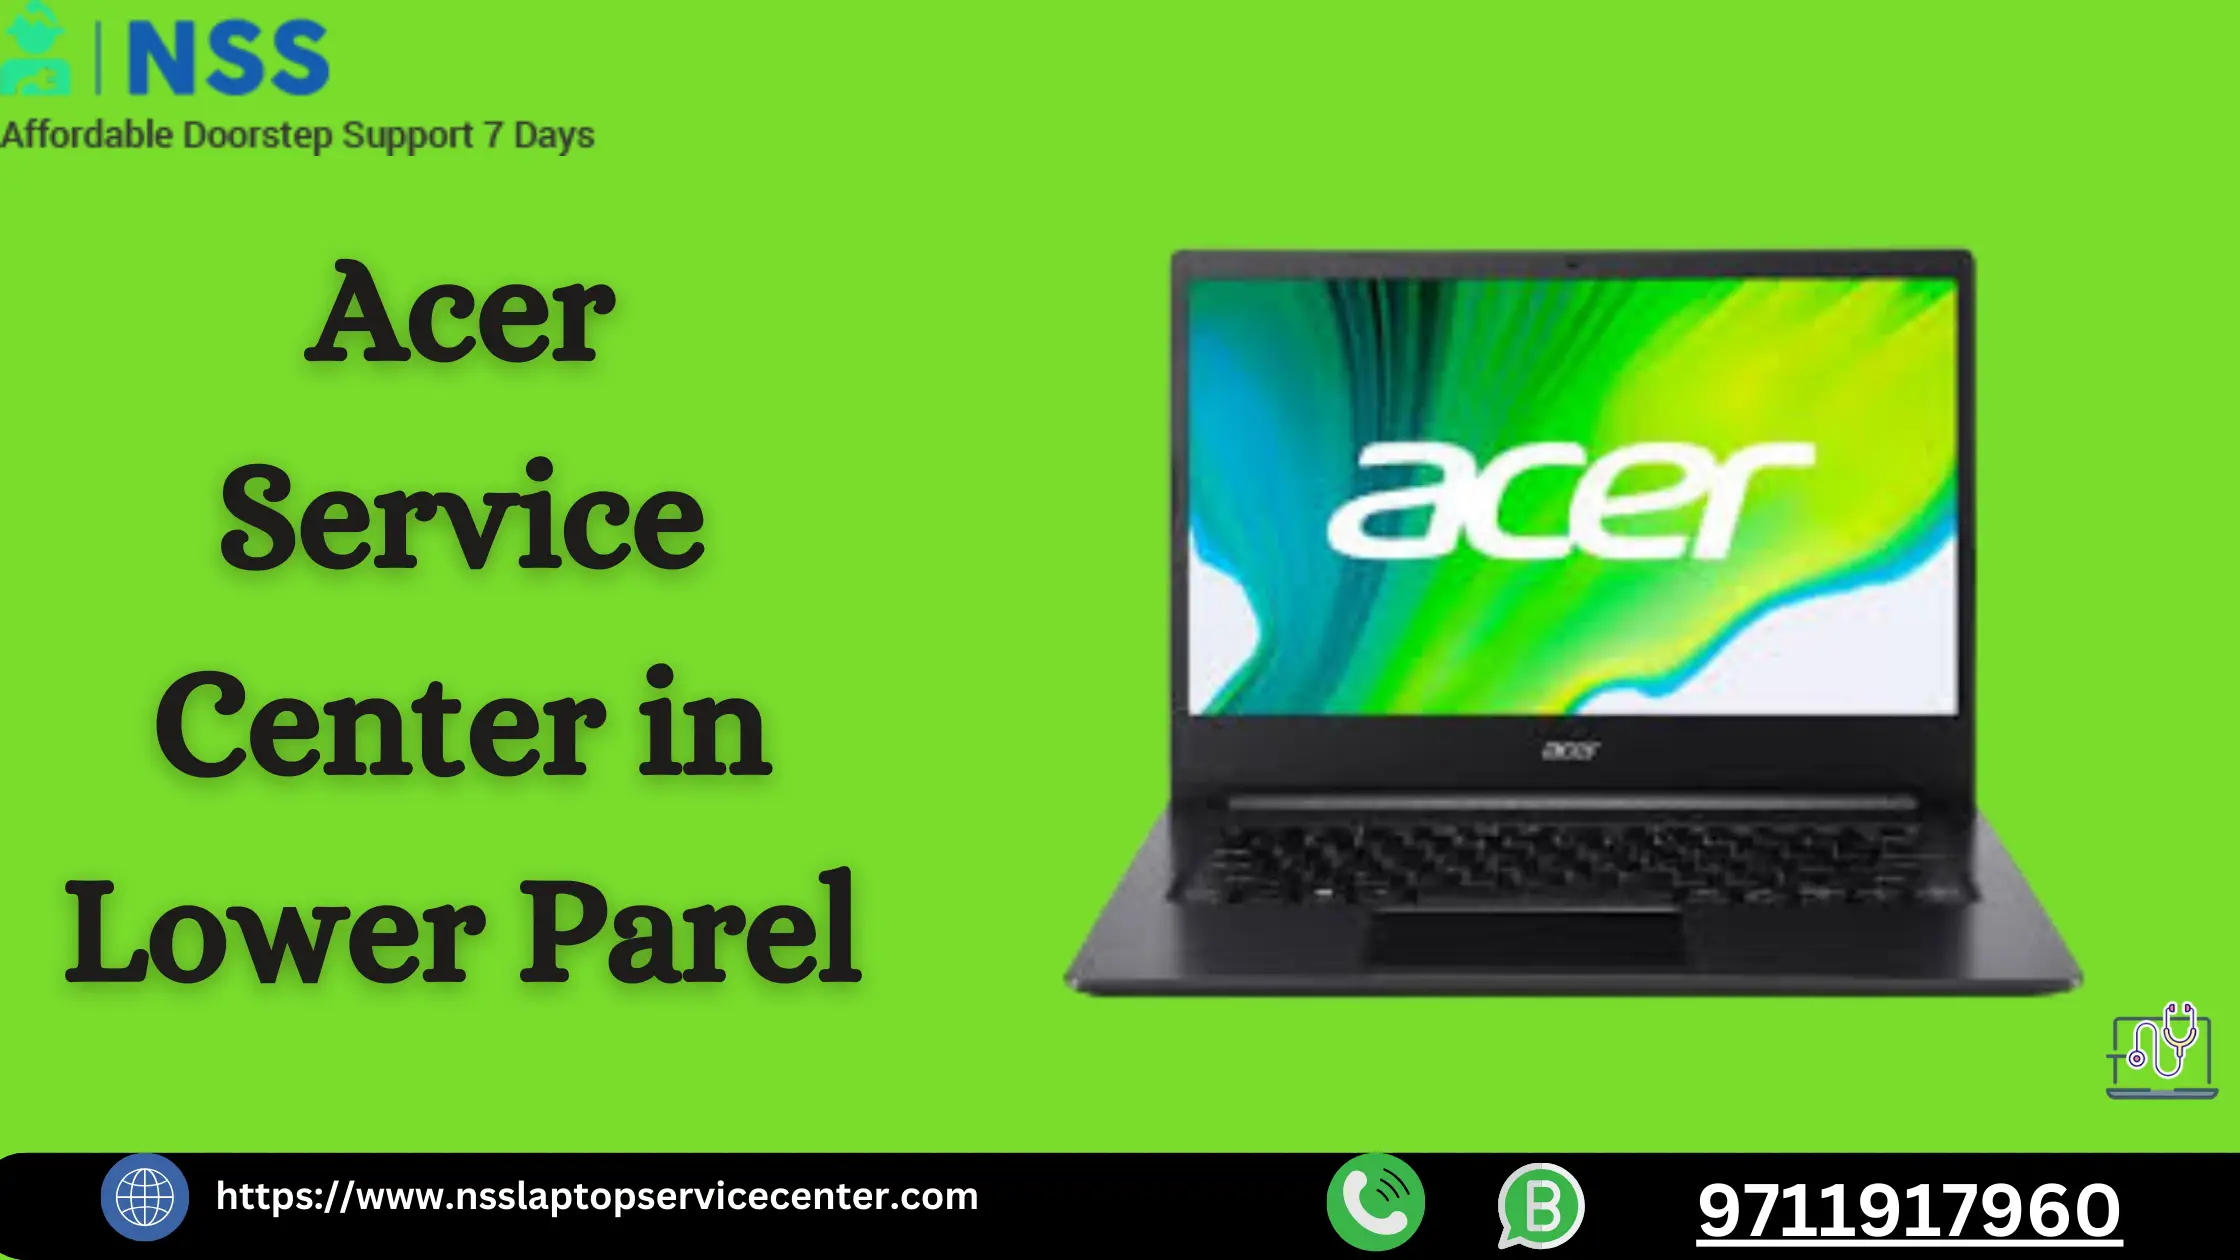 Acer Service Center in Lower Parel Near Mumbai